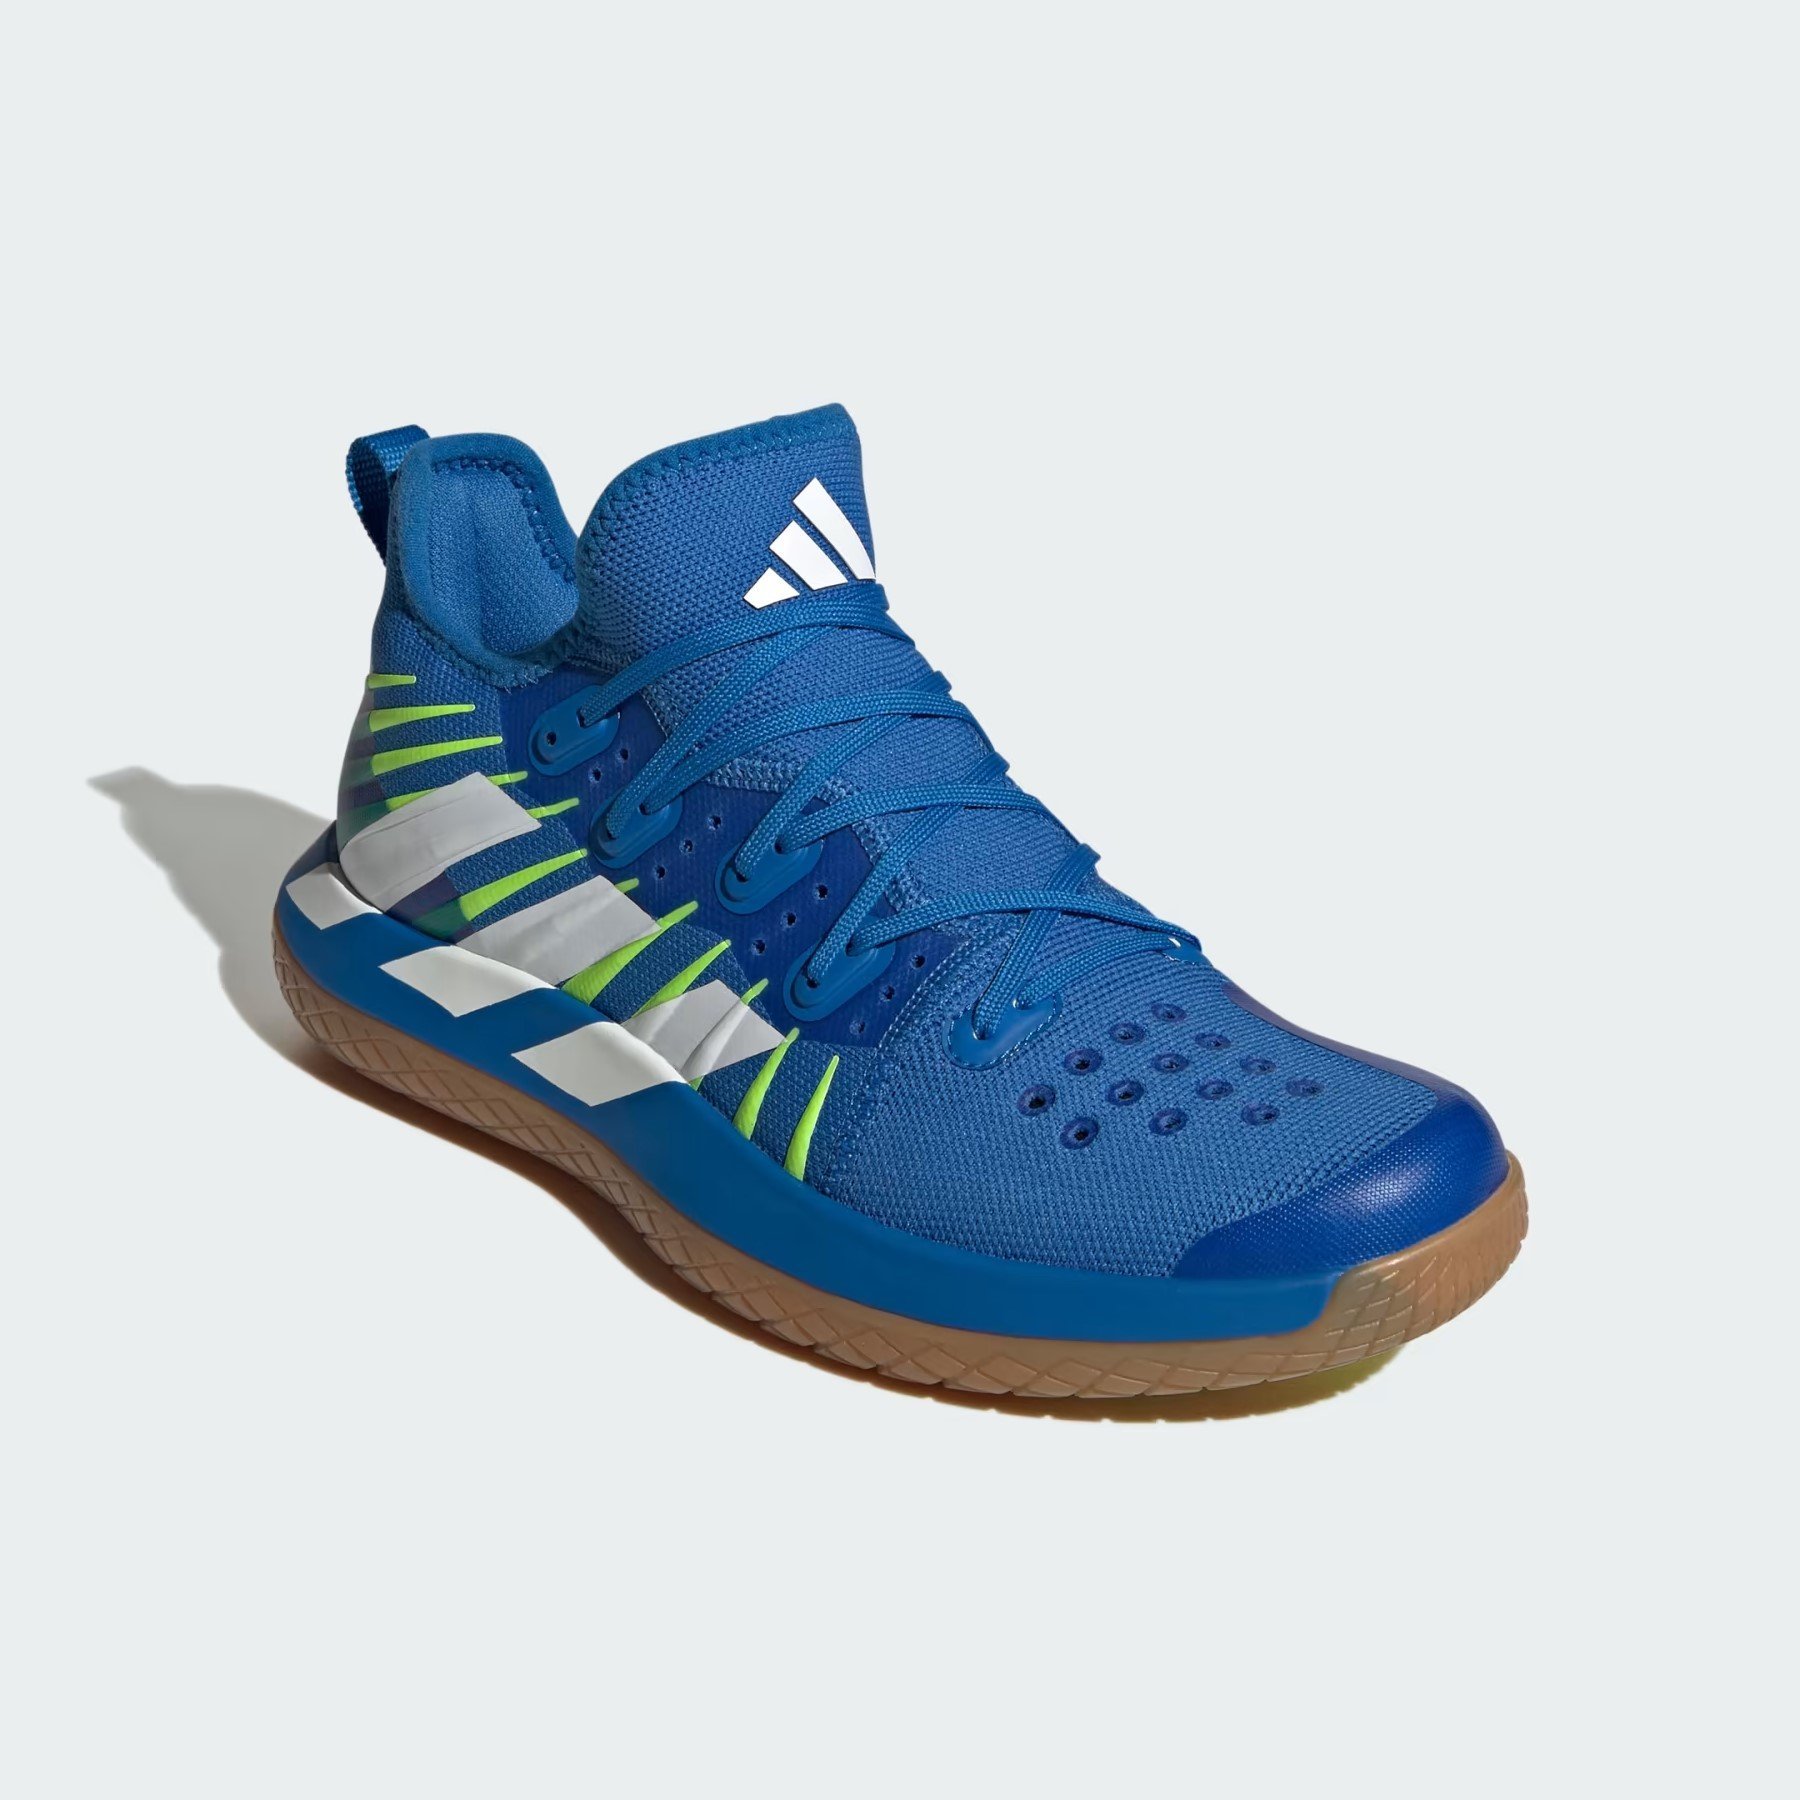 Obuv Adidas Stabil Next Gen M - modrá/biela/zelená